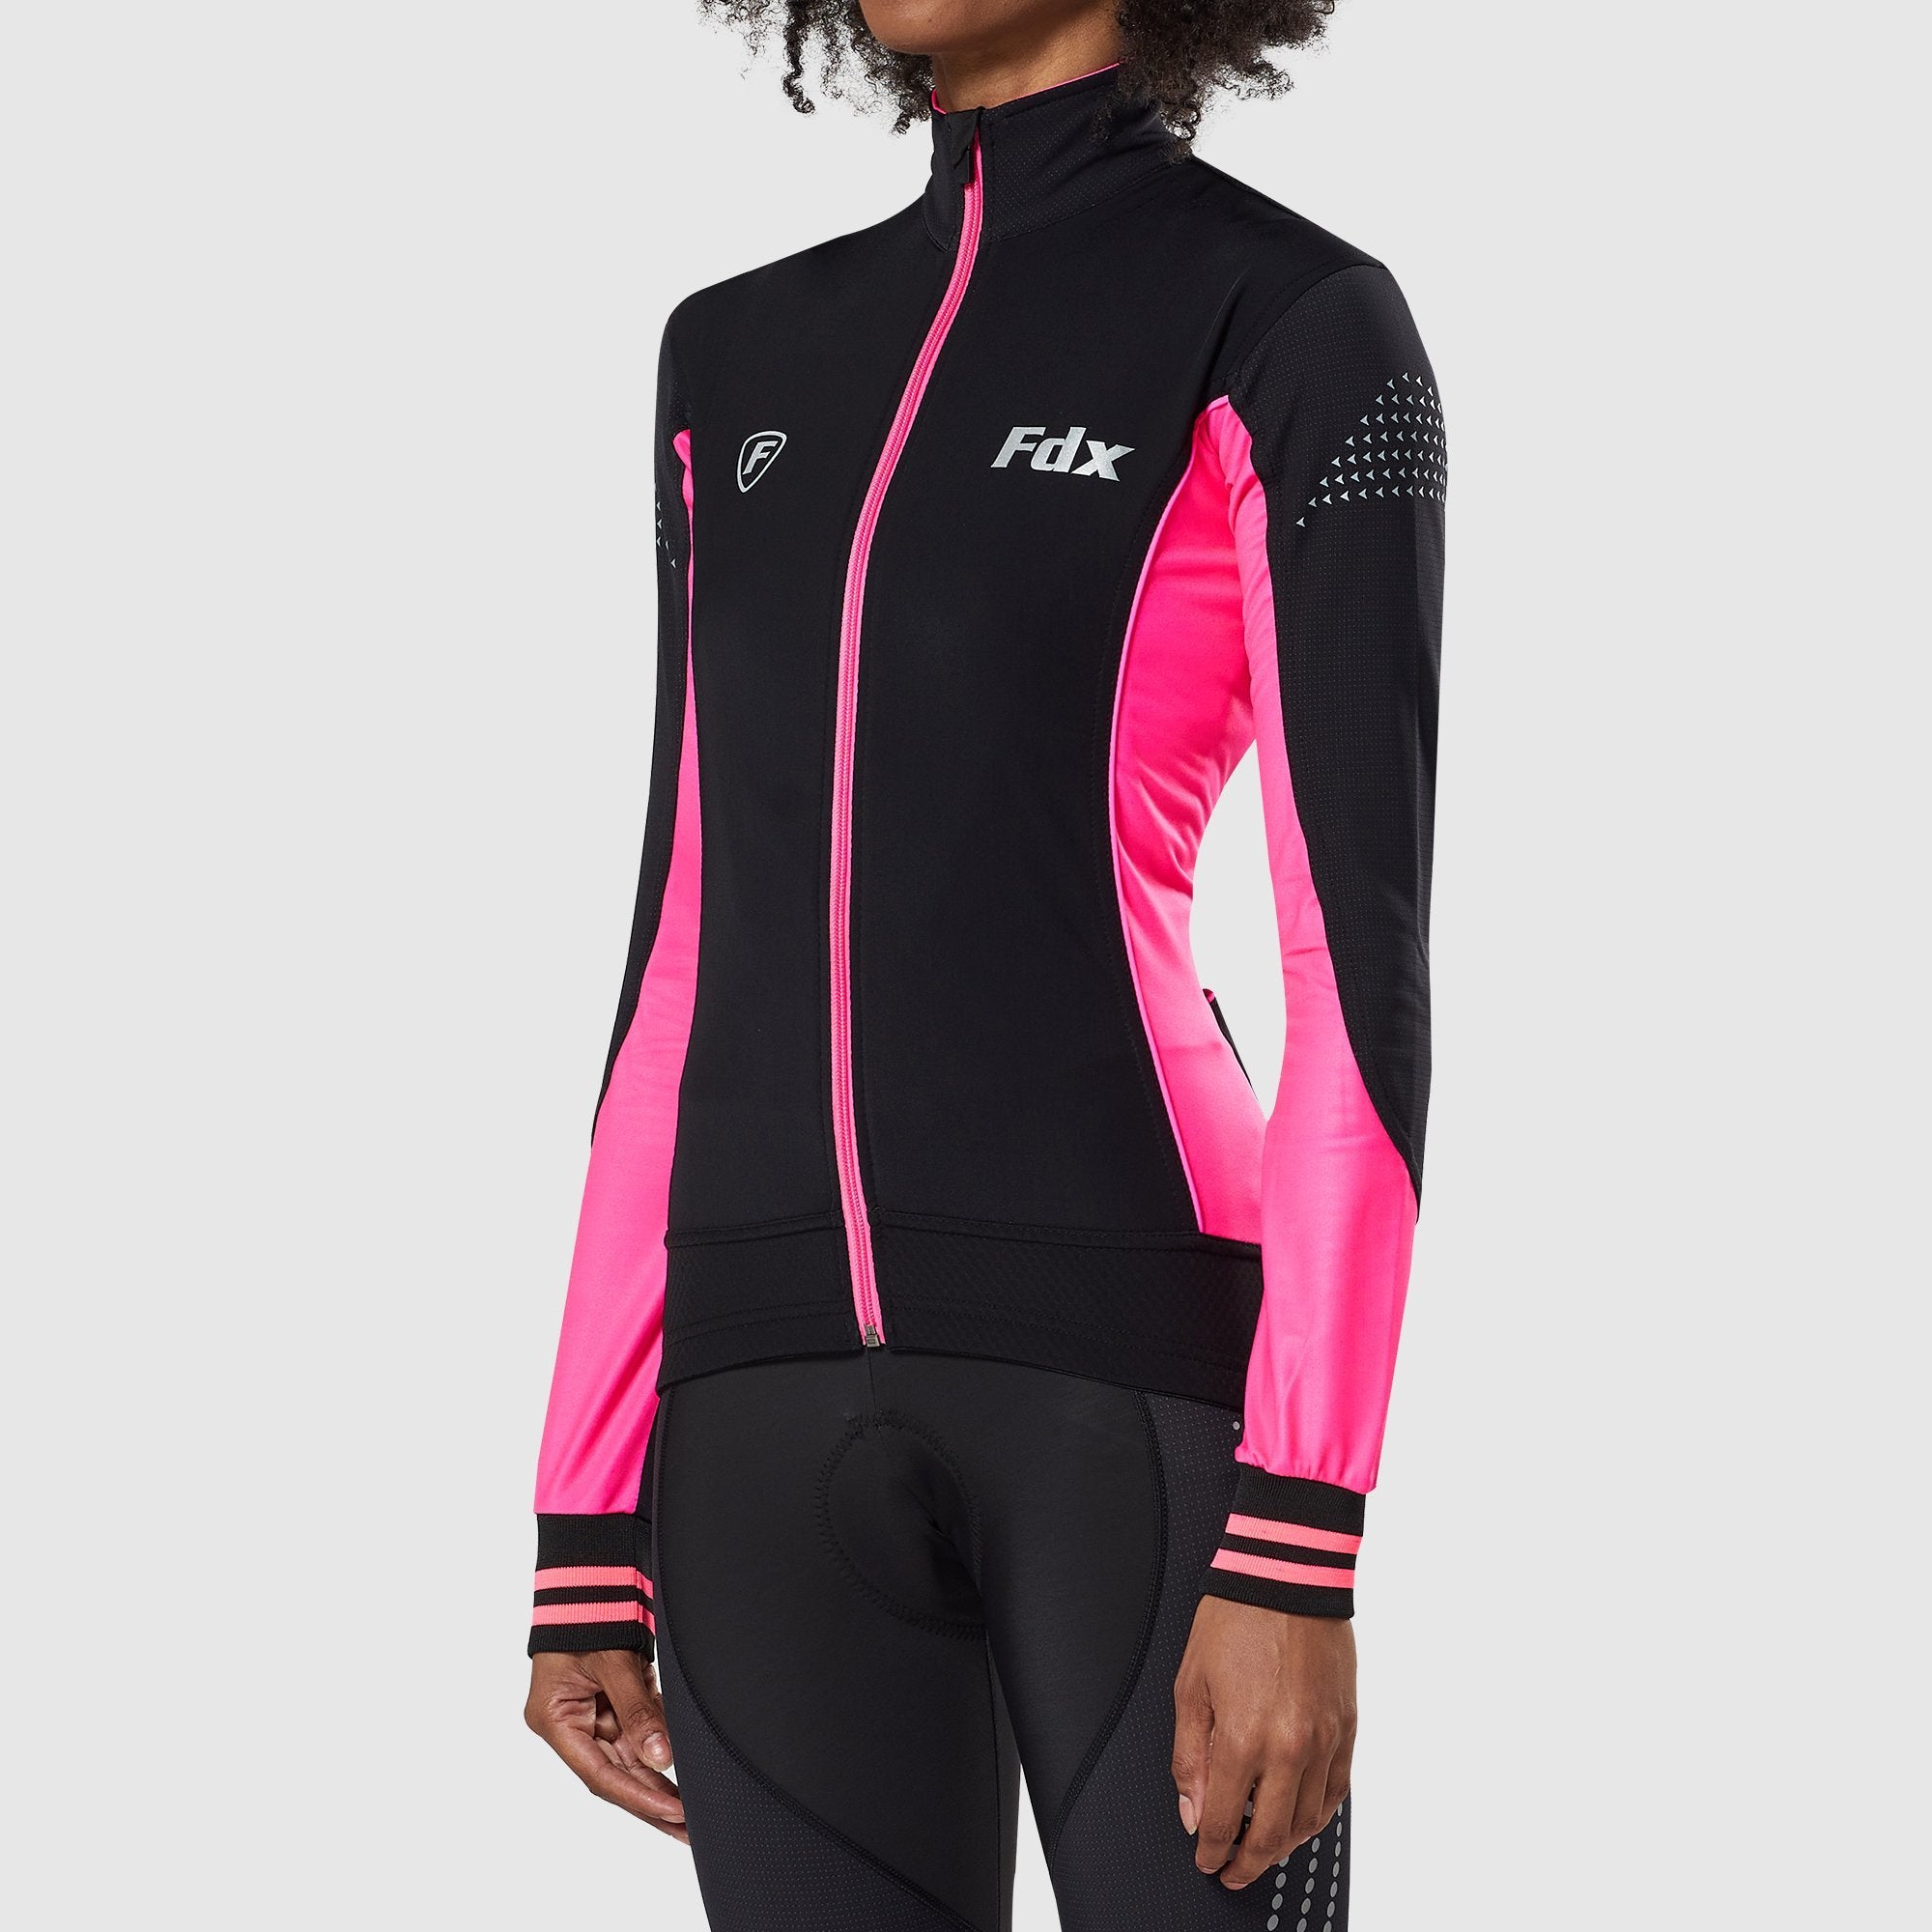 Fdx Best Women's Black & Pink Long Sleeve Cycling Jersey for Winter Roubaix Thermal Fleece Shirt Road Bike Wear Top Full Zipper, Lightweight  Pockets & Hi viz Reflectors - Thermodream